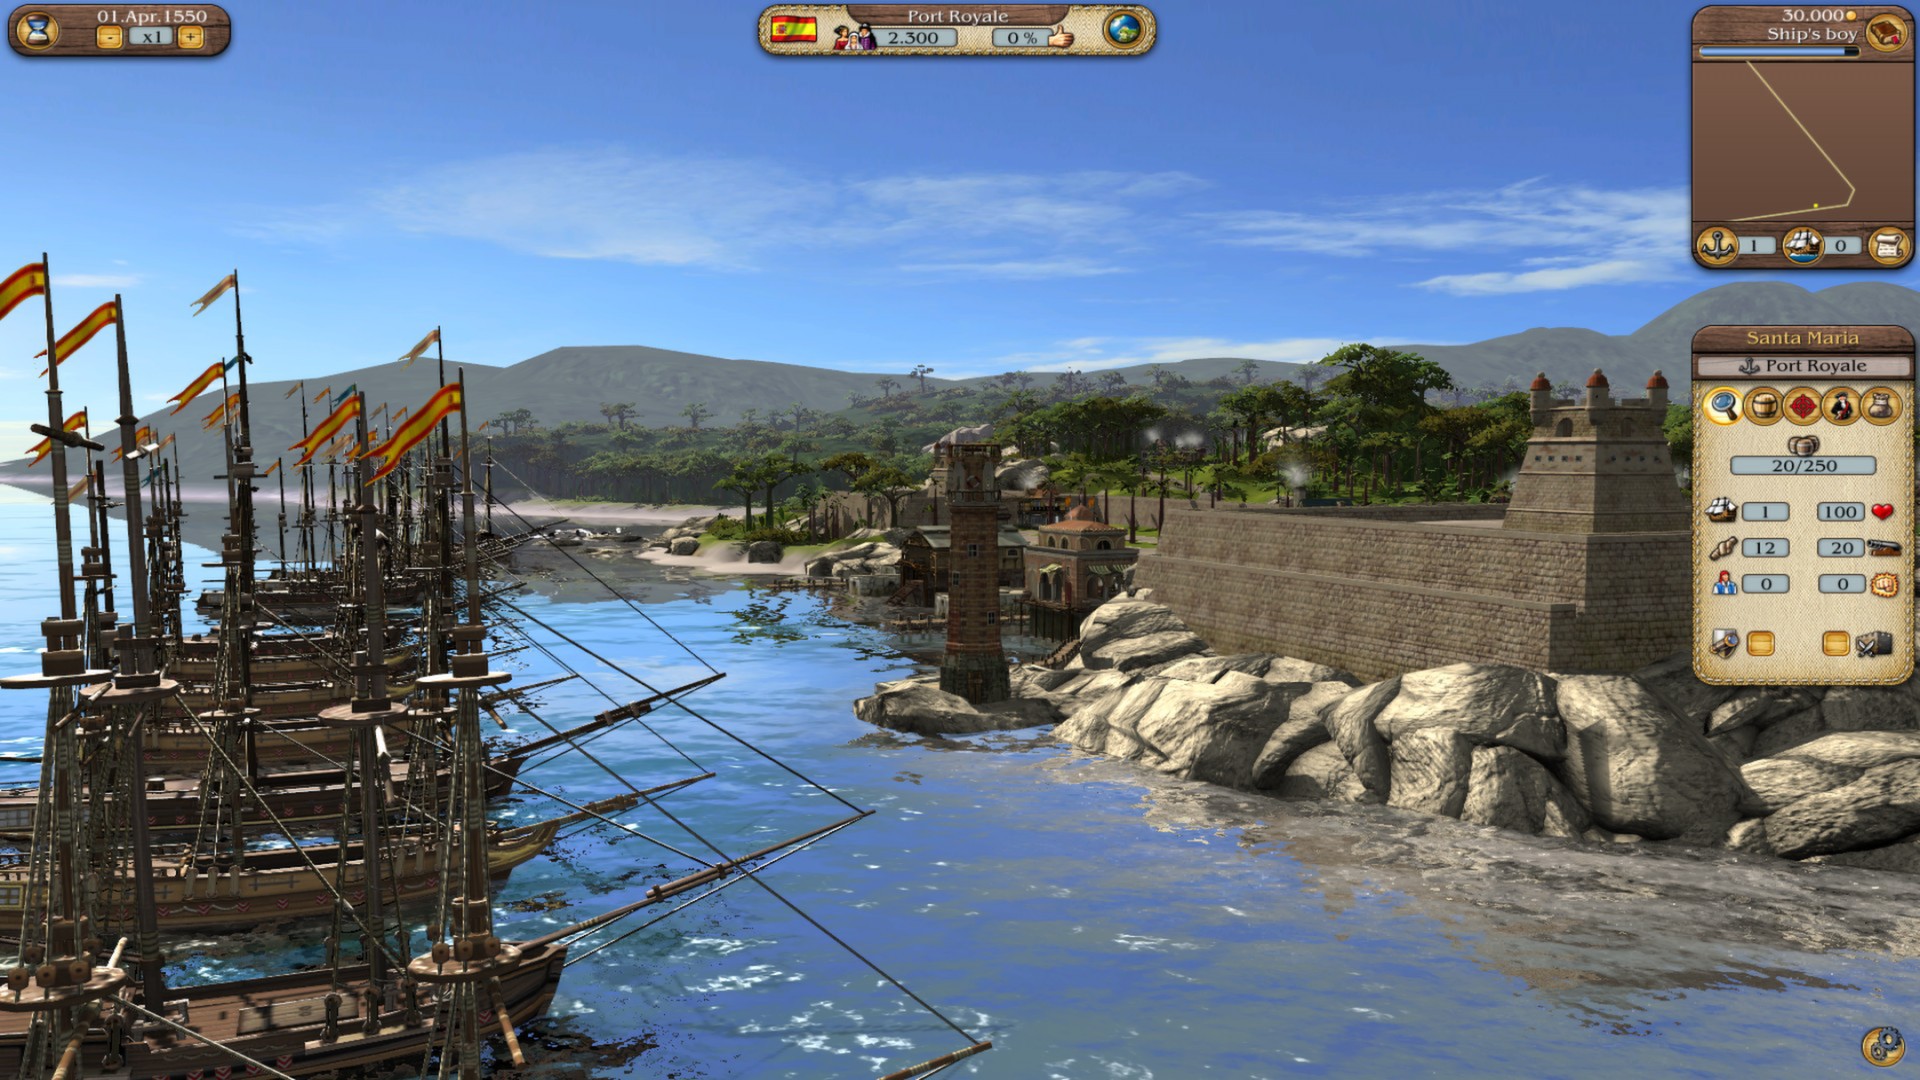 Port Royale 3 on Steam